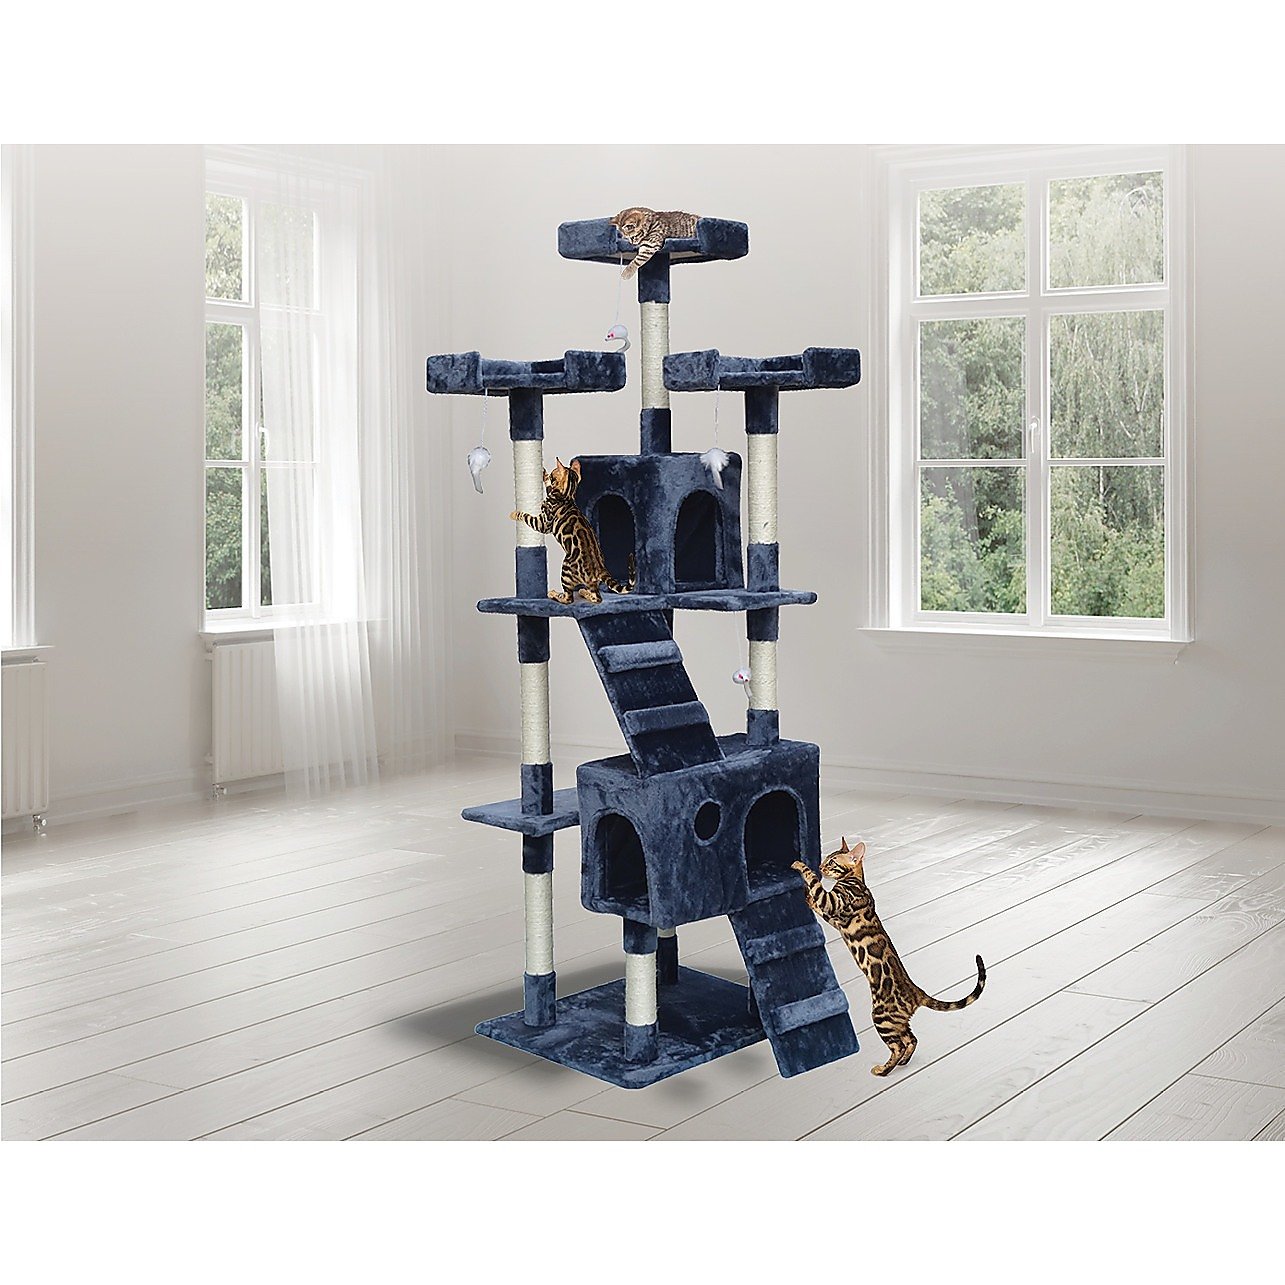 180cm Cat Tree Scratching Post Scratcher Tower Condo House Furniture